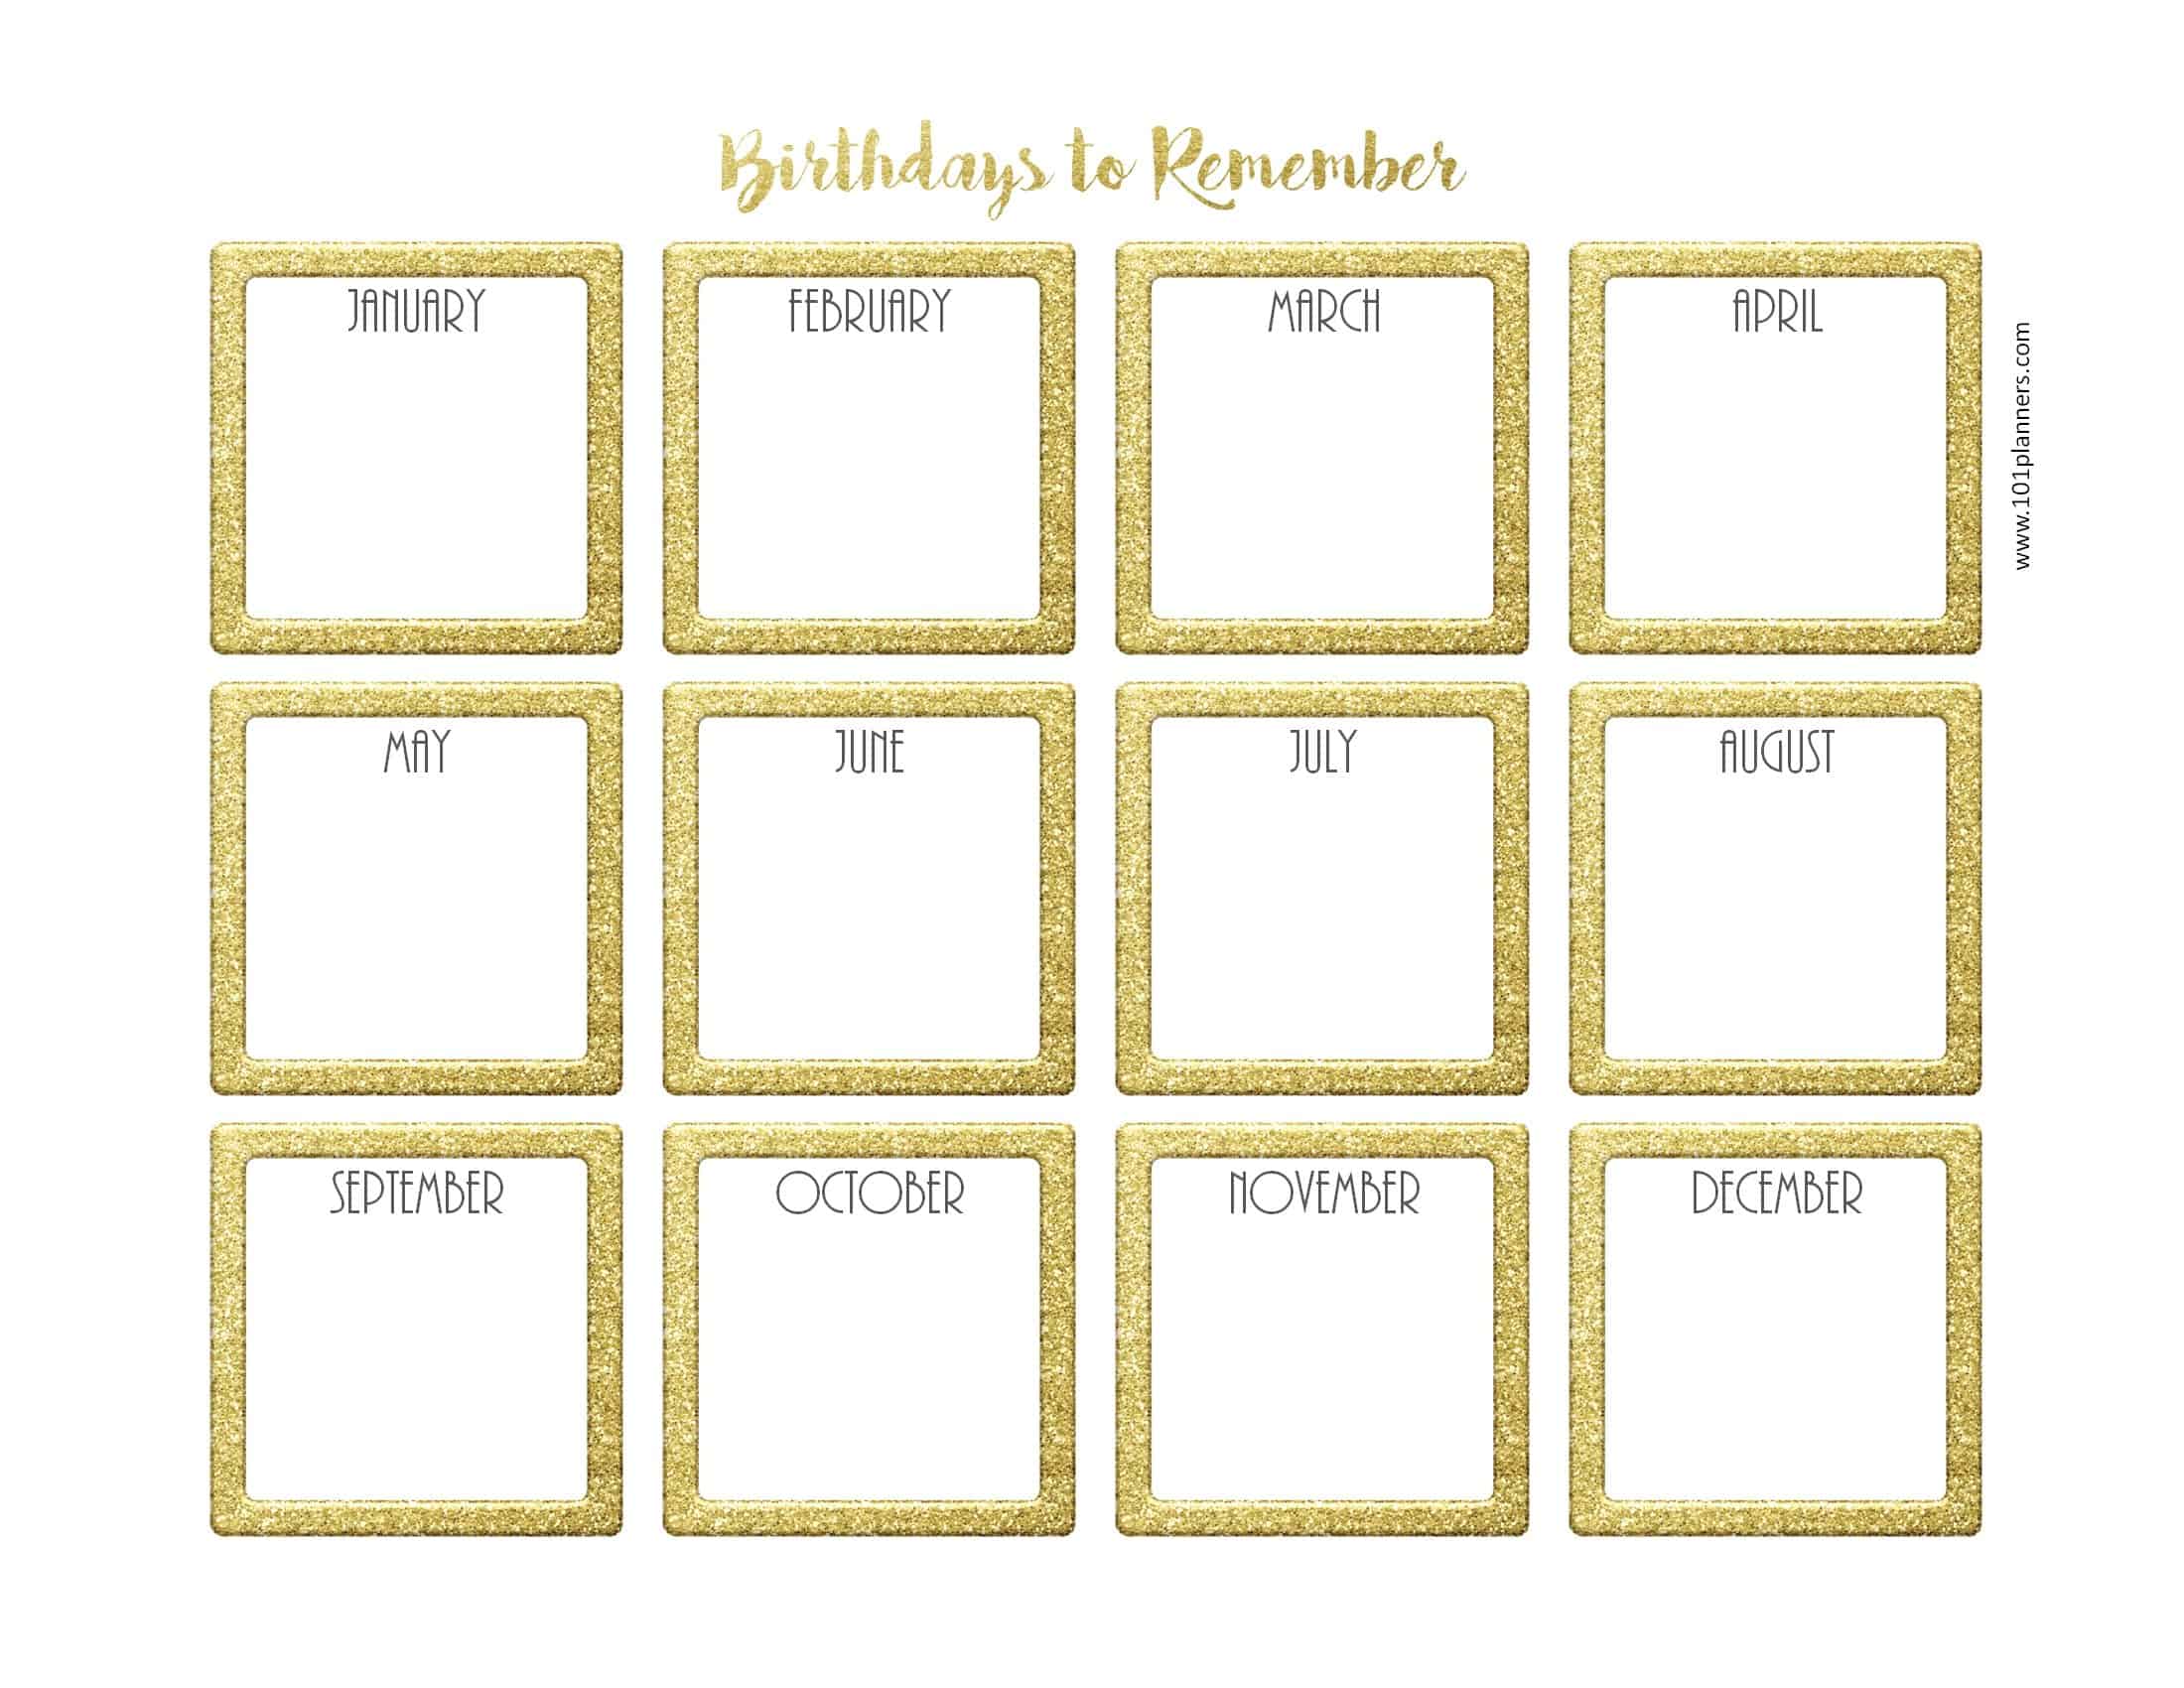 birthday-calendars-7-free-printable-word-templates-birthday